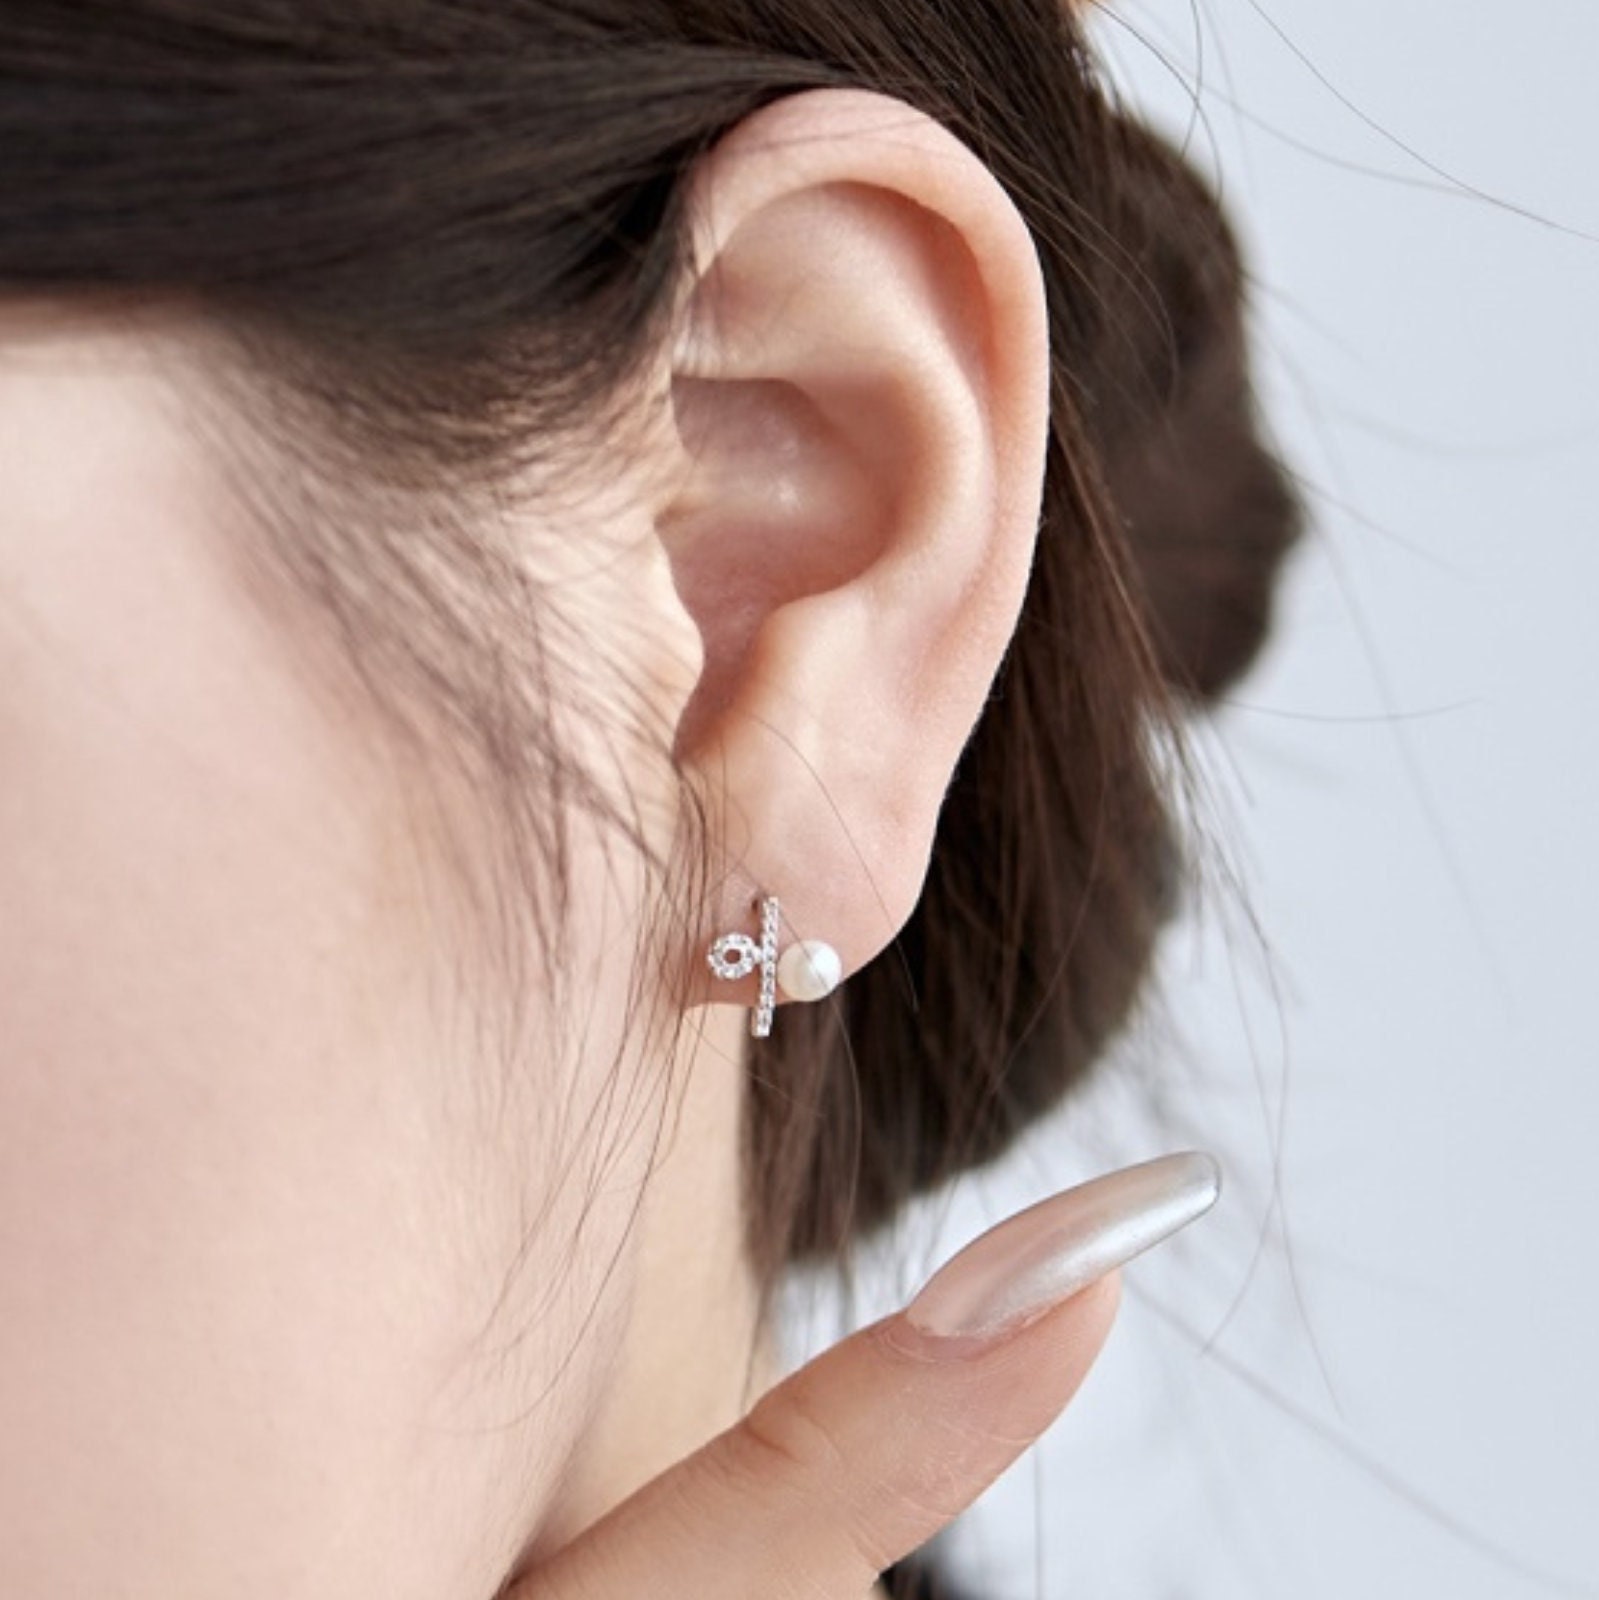 Metal Free Earrings, Plastic Post Hypoallergenic Earrings for Sensitive Ears,  Agate Earrings, Plastic Stud Earrings, Gift for Her 